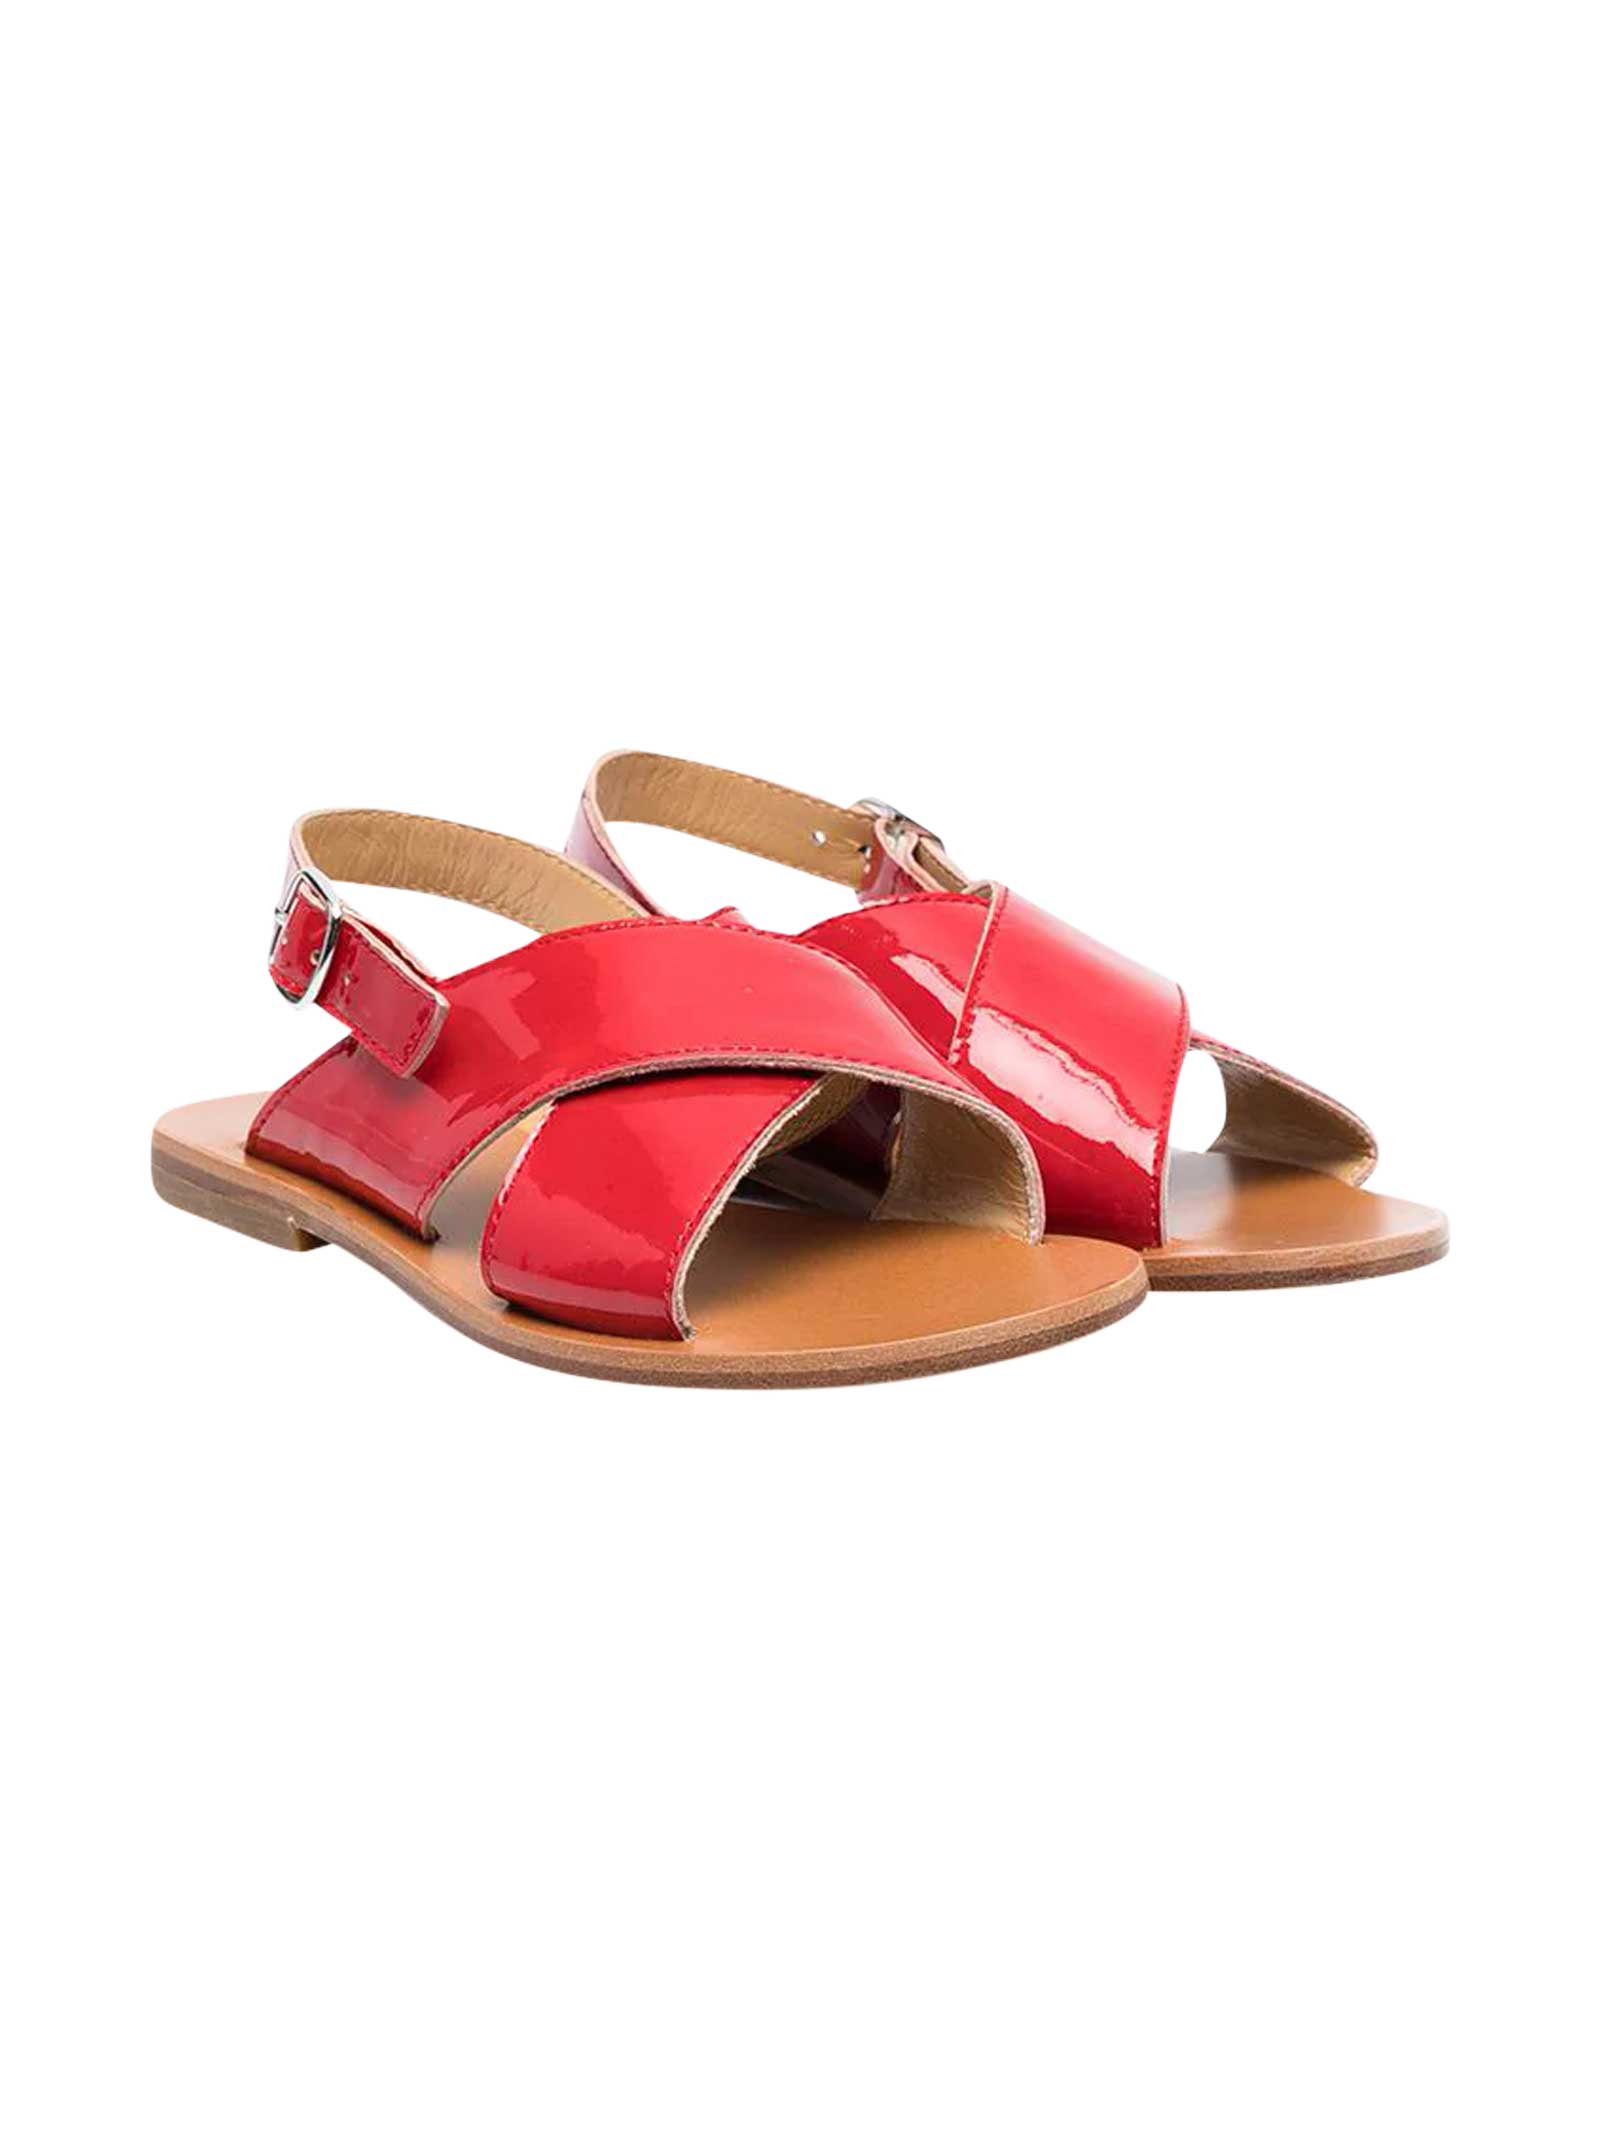 Gallucci Red Sandals